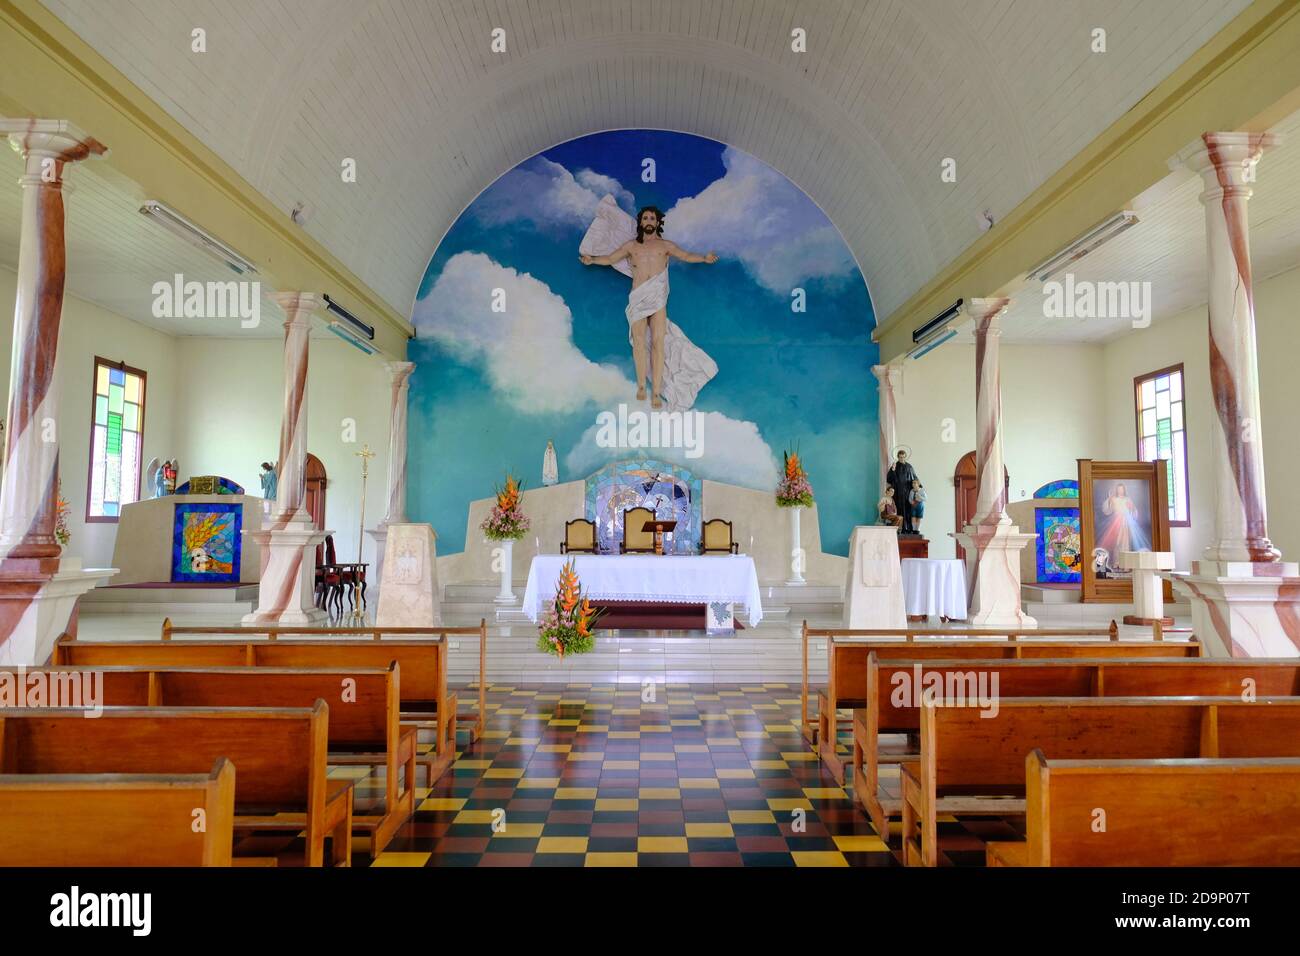 Fondo de pantalla de la iglesia fotografías e imágenes de alta resolución -  Alamy